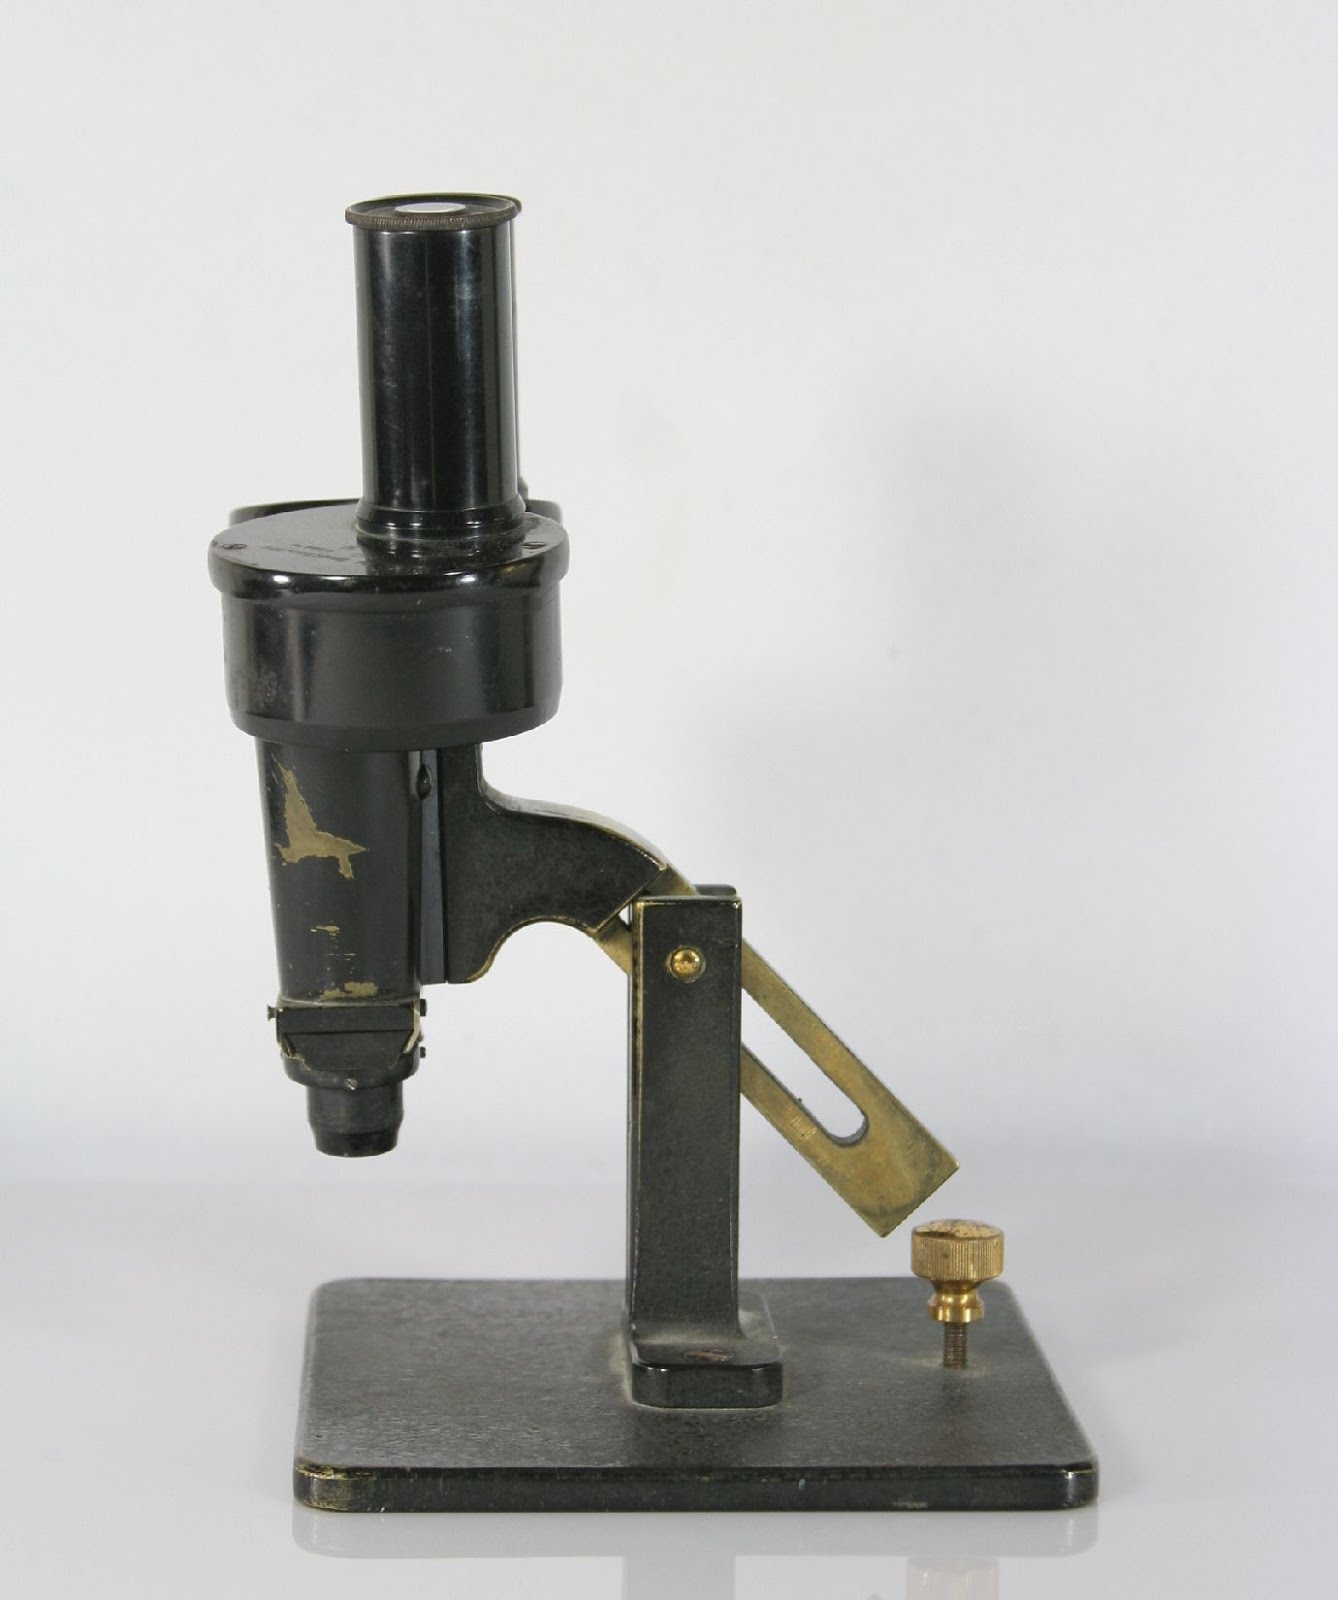 optical instruments